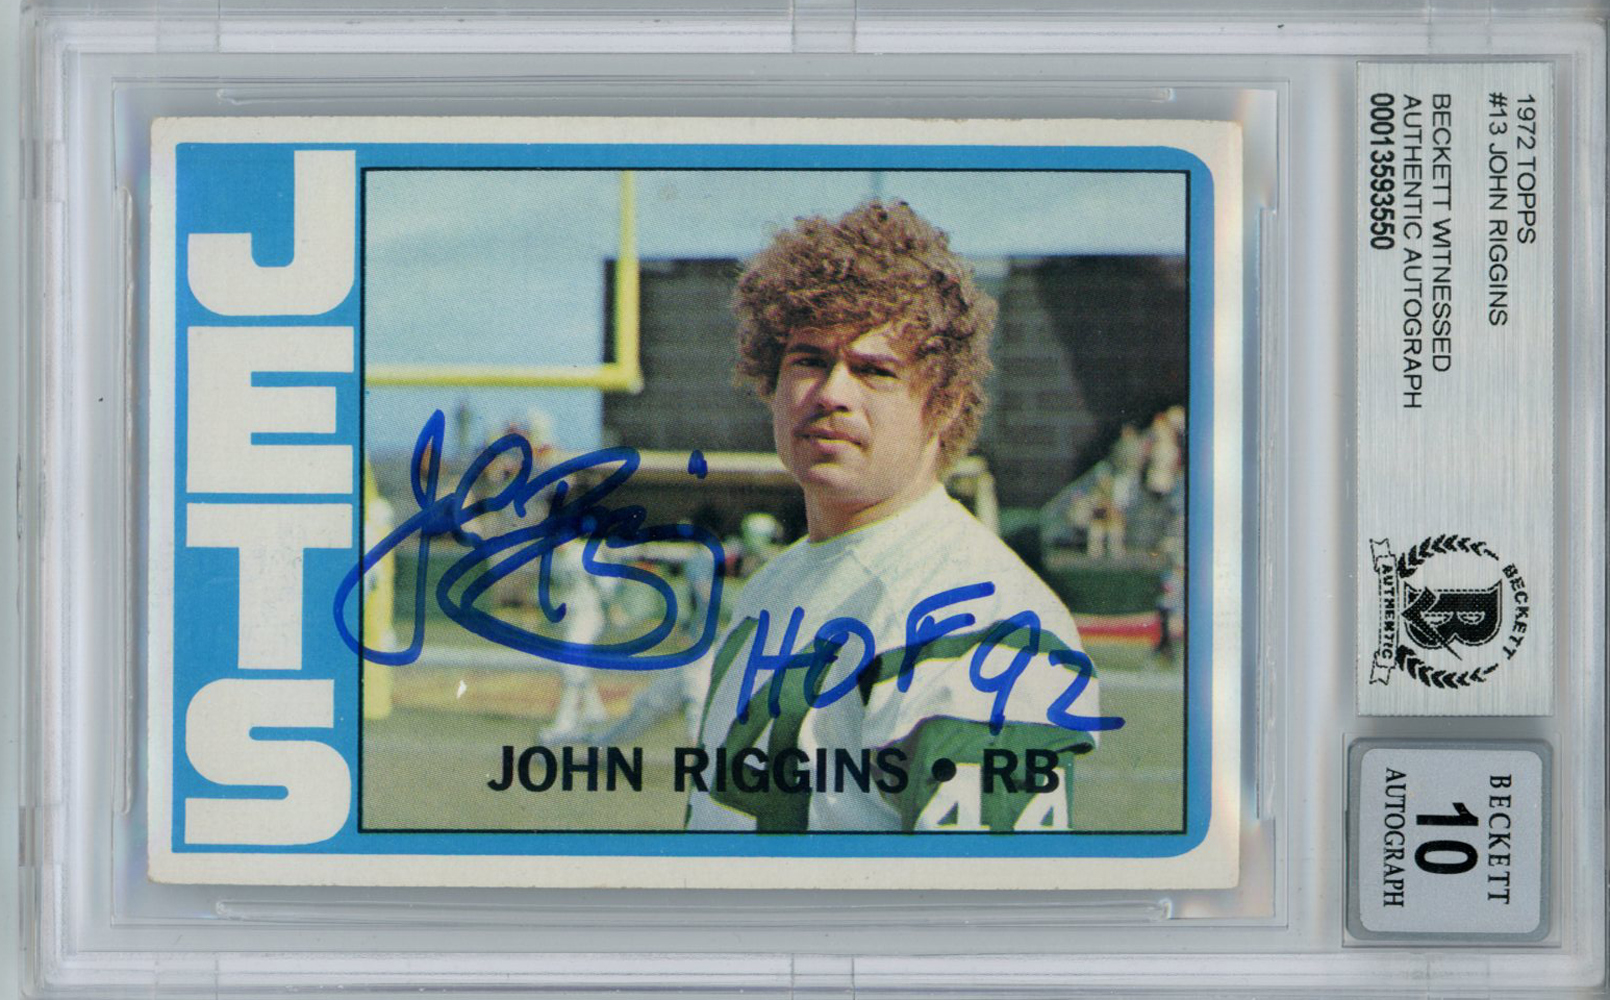 John Riggins Autographed 1972 Topps #13 Rookie Card HOF Beckett Slab